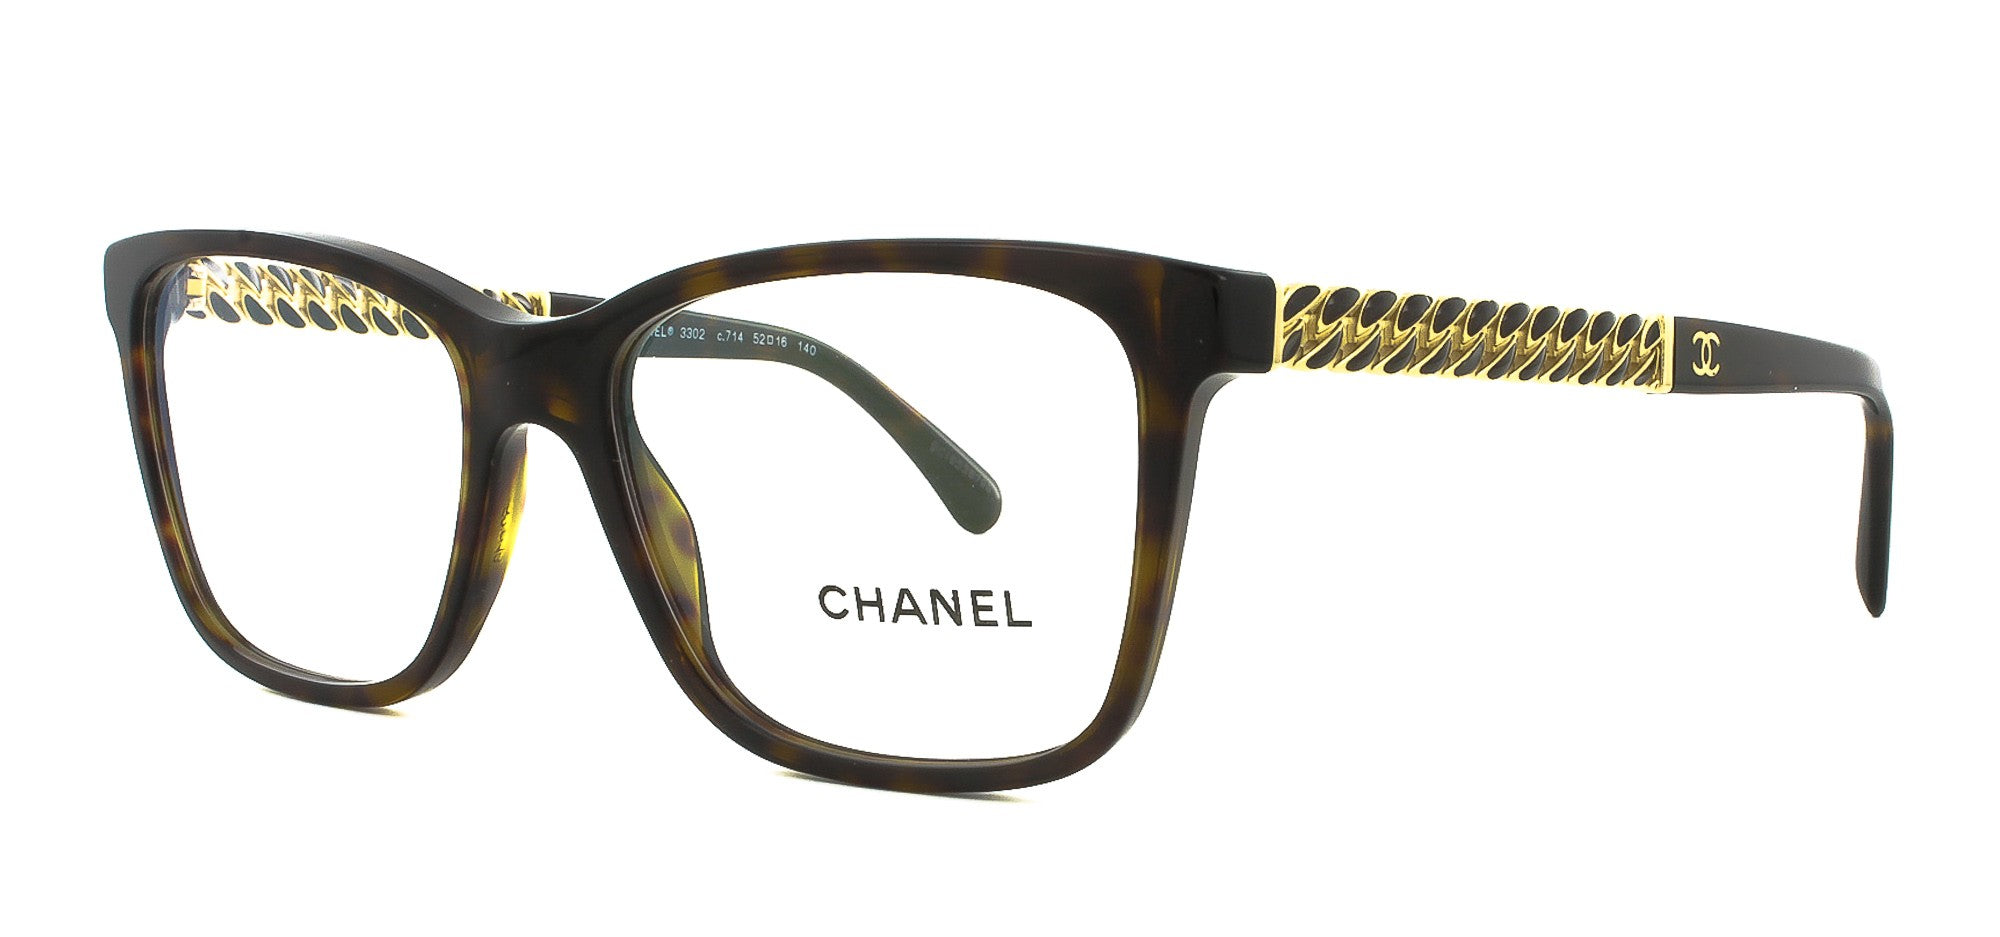 Trendy glasses: 10 must-have pairs of stylish eyewear